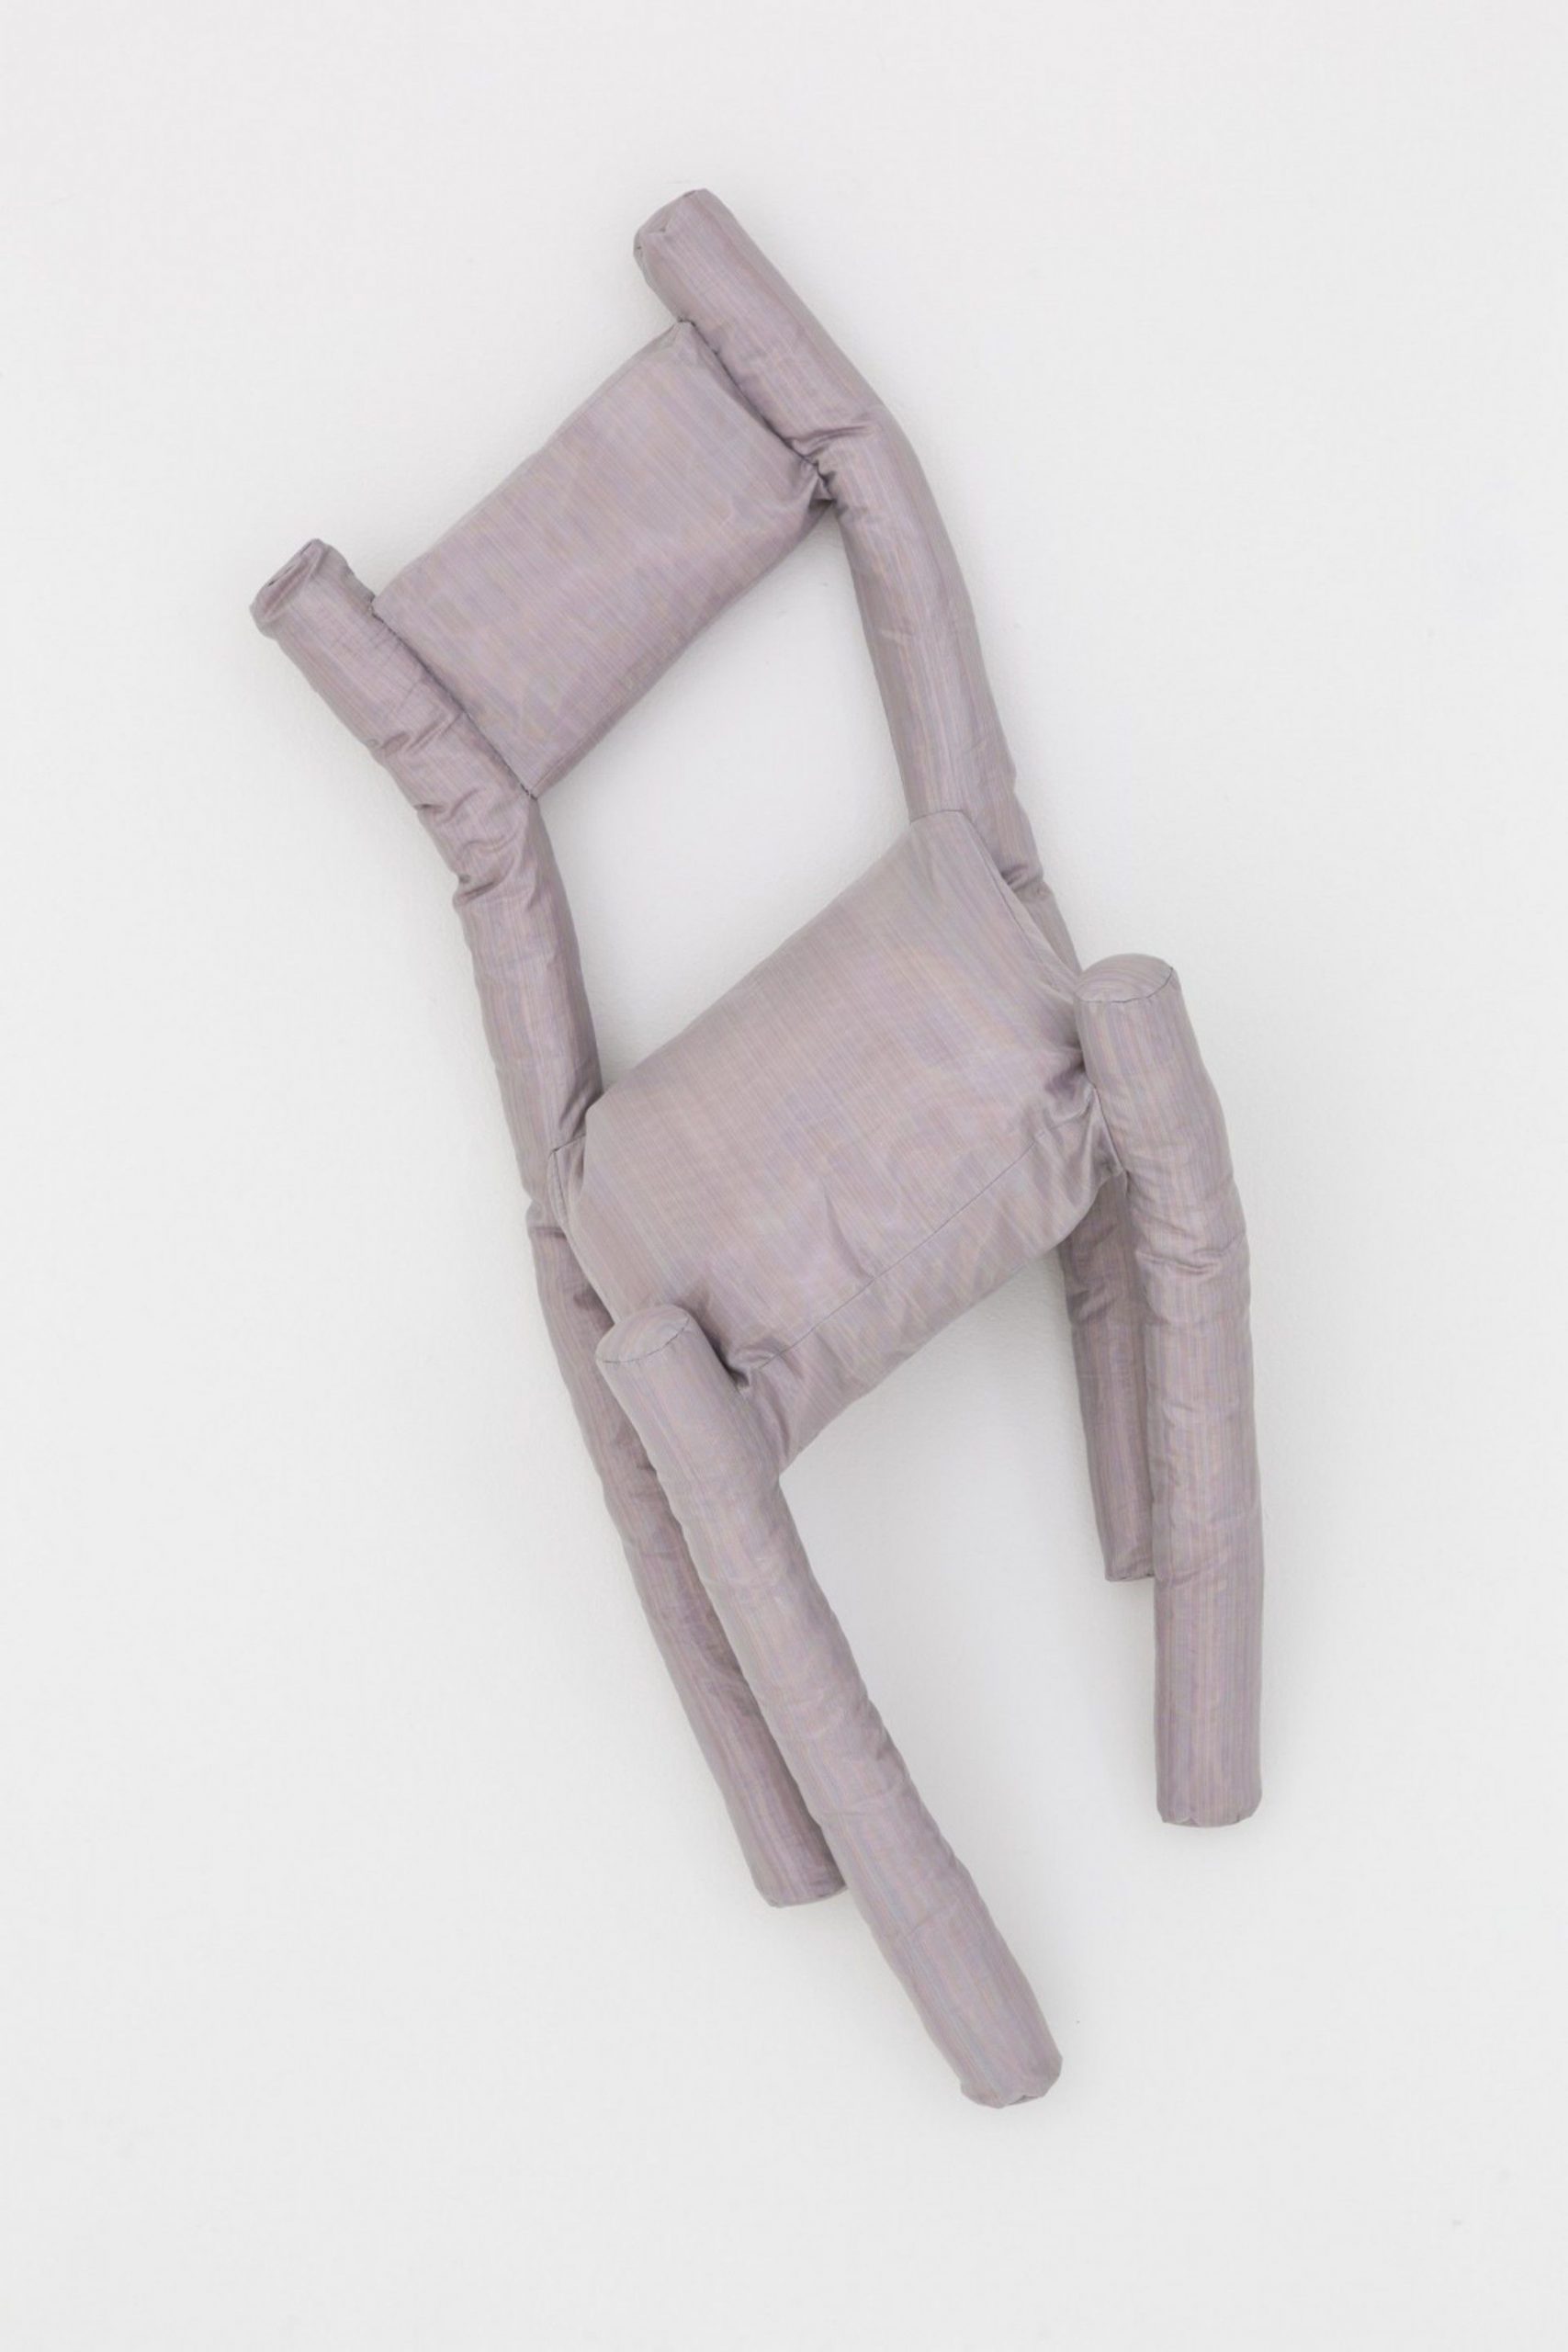 Katie Stout sculpture, Sad Chair 2, installed at Gallery Diet, Miami 2015.